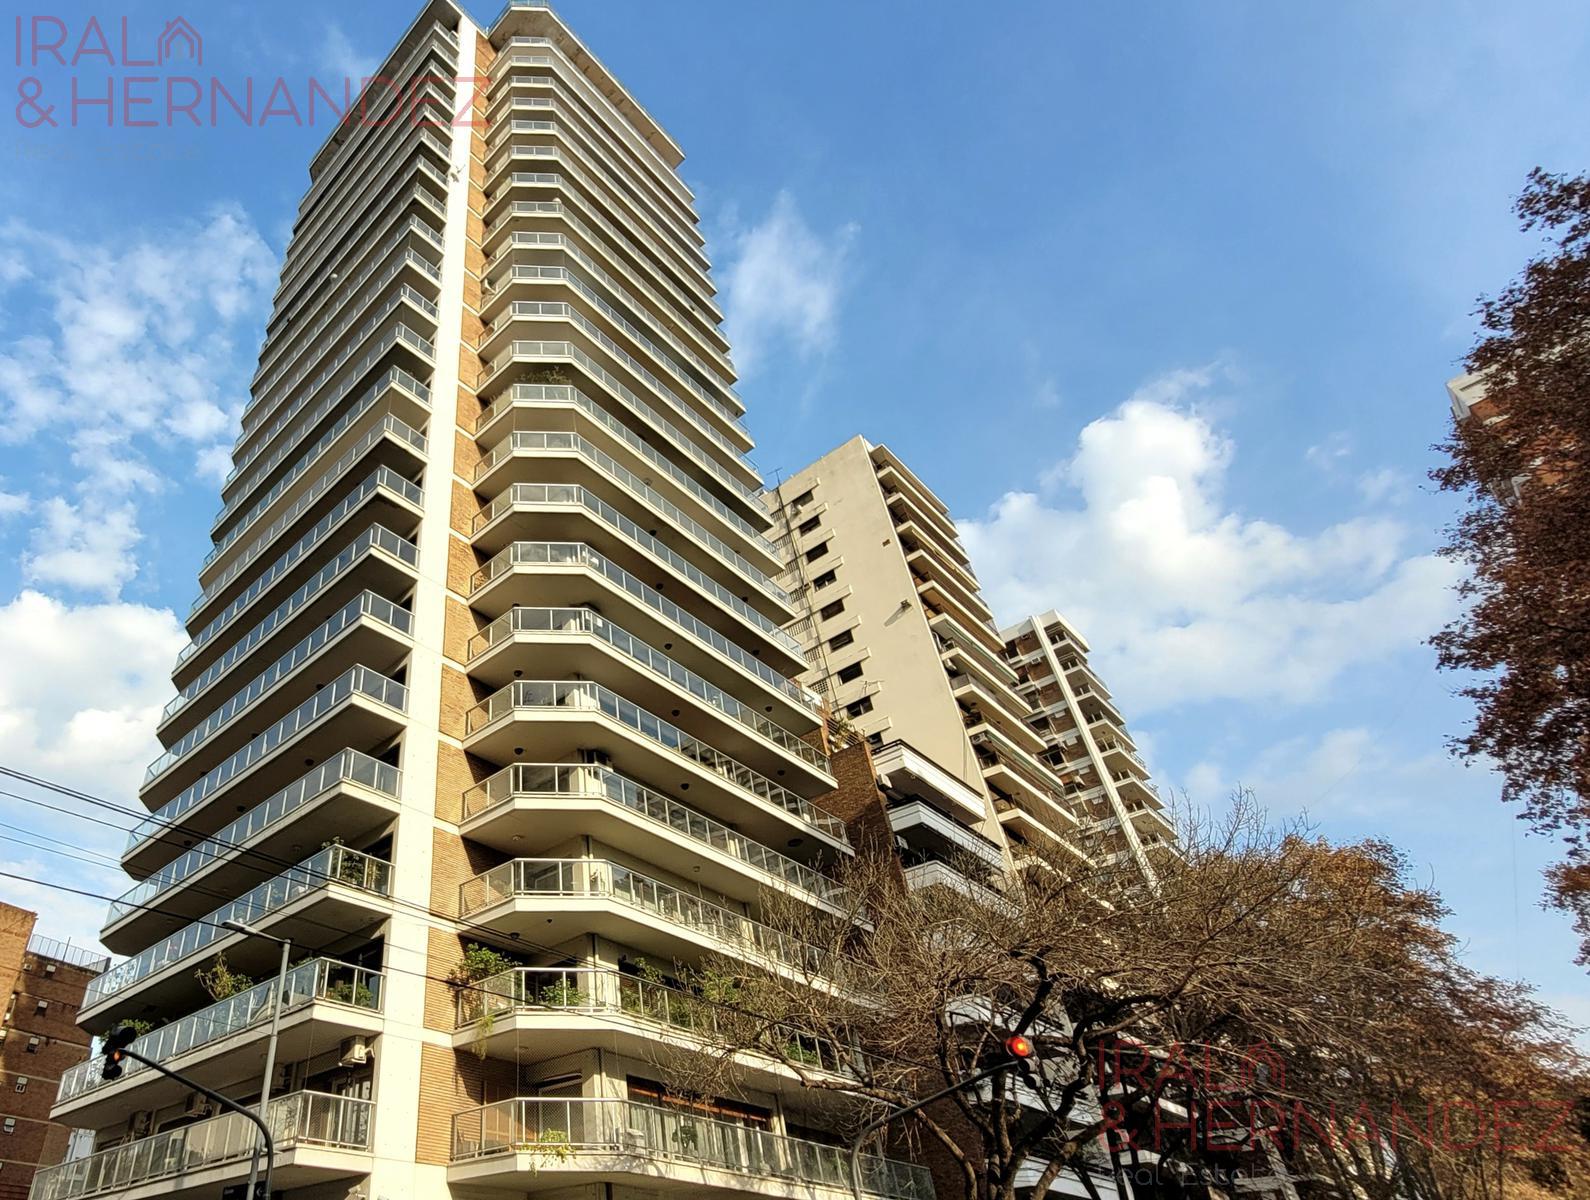 #5184148 | Sale | Apartment | Belgrano (Irala & Hernandez Real Estate)